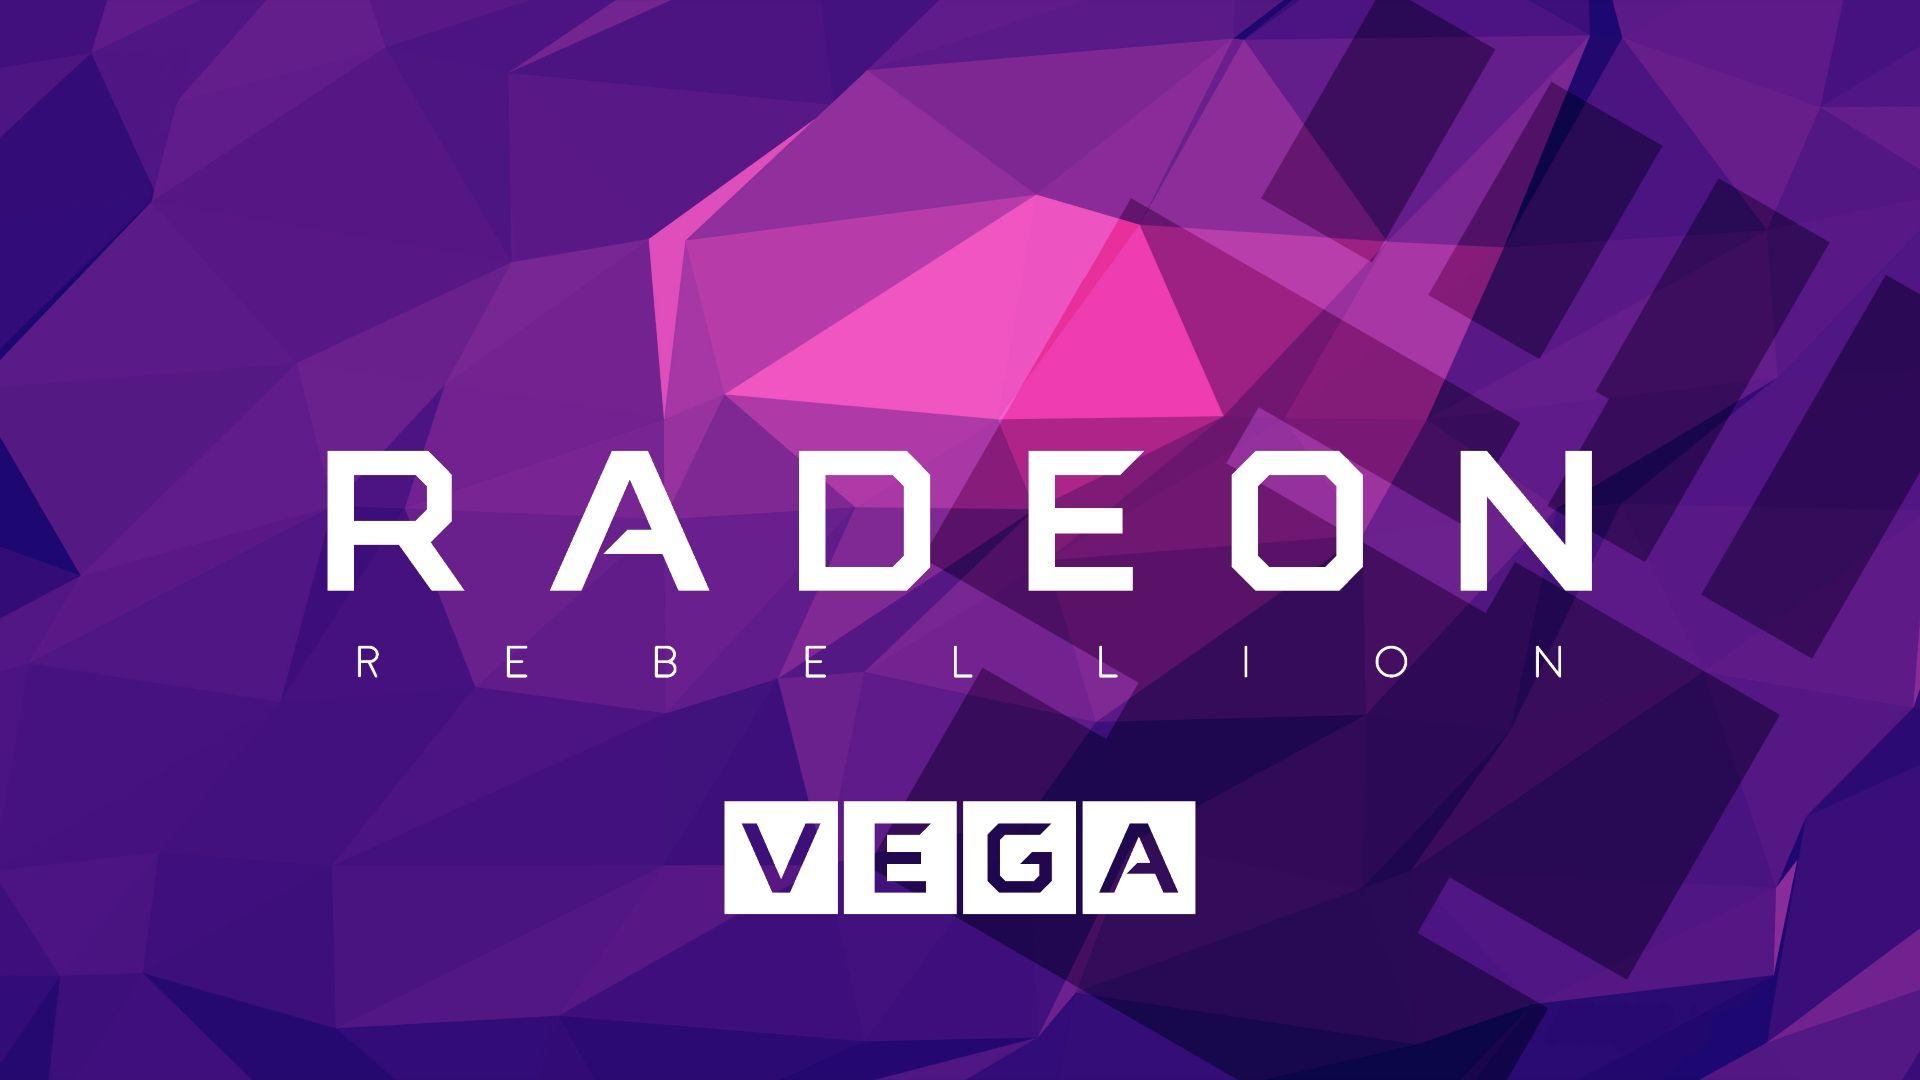 Steam Workshop - Radeon Vega Wallpaper (Animated)